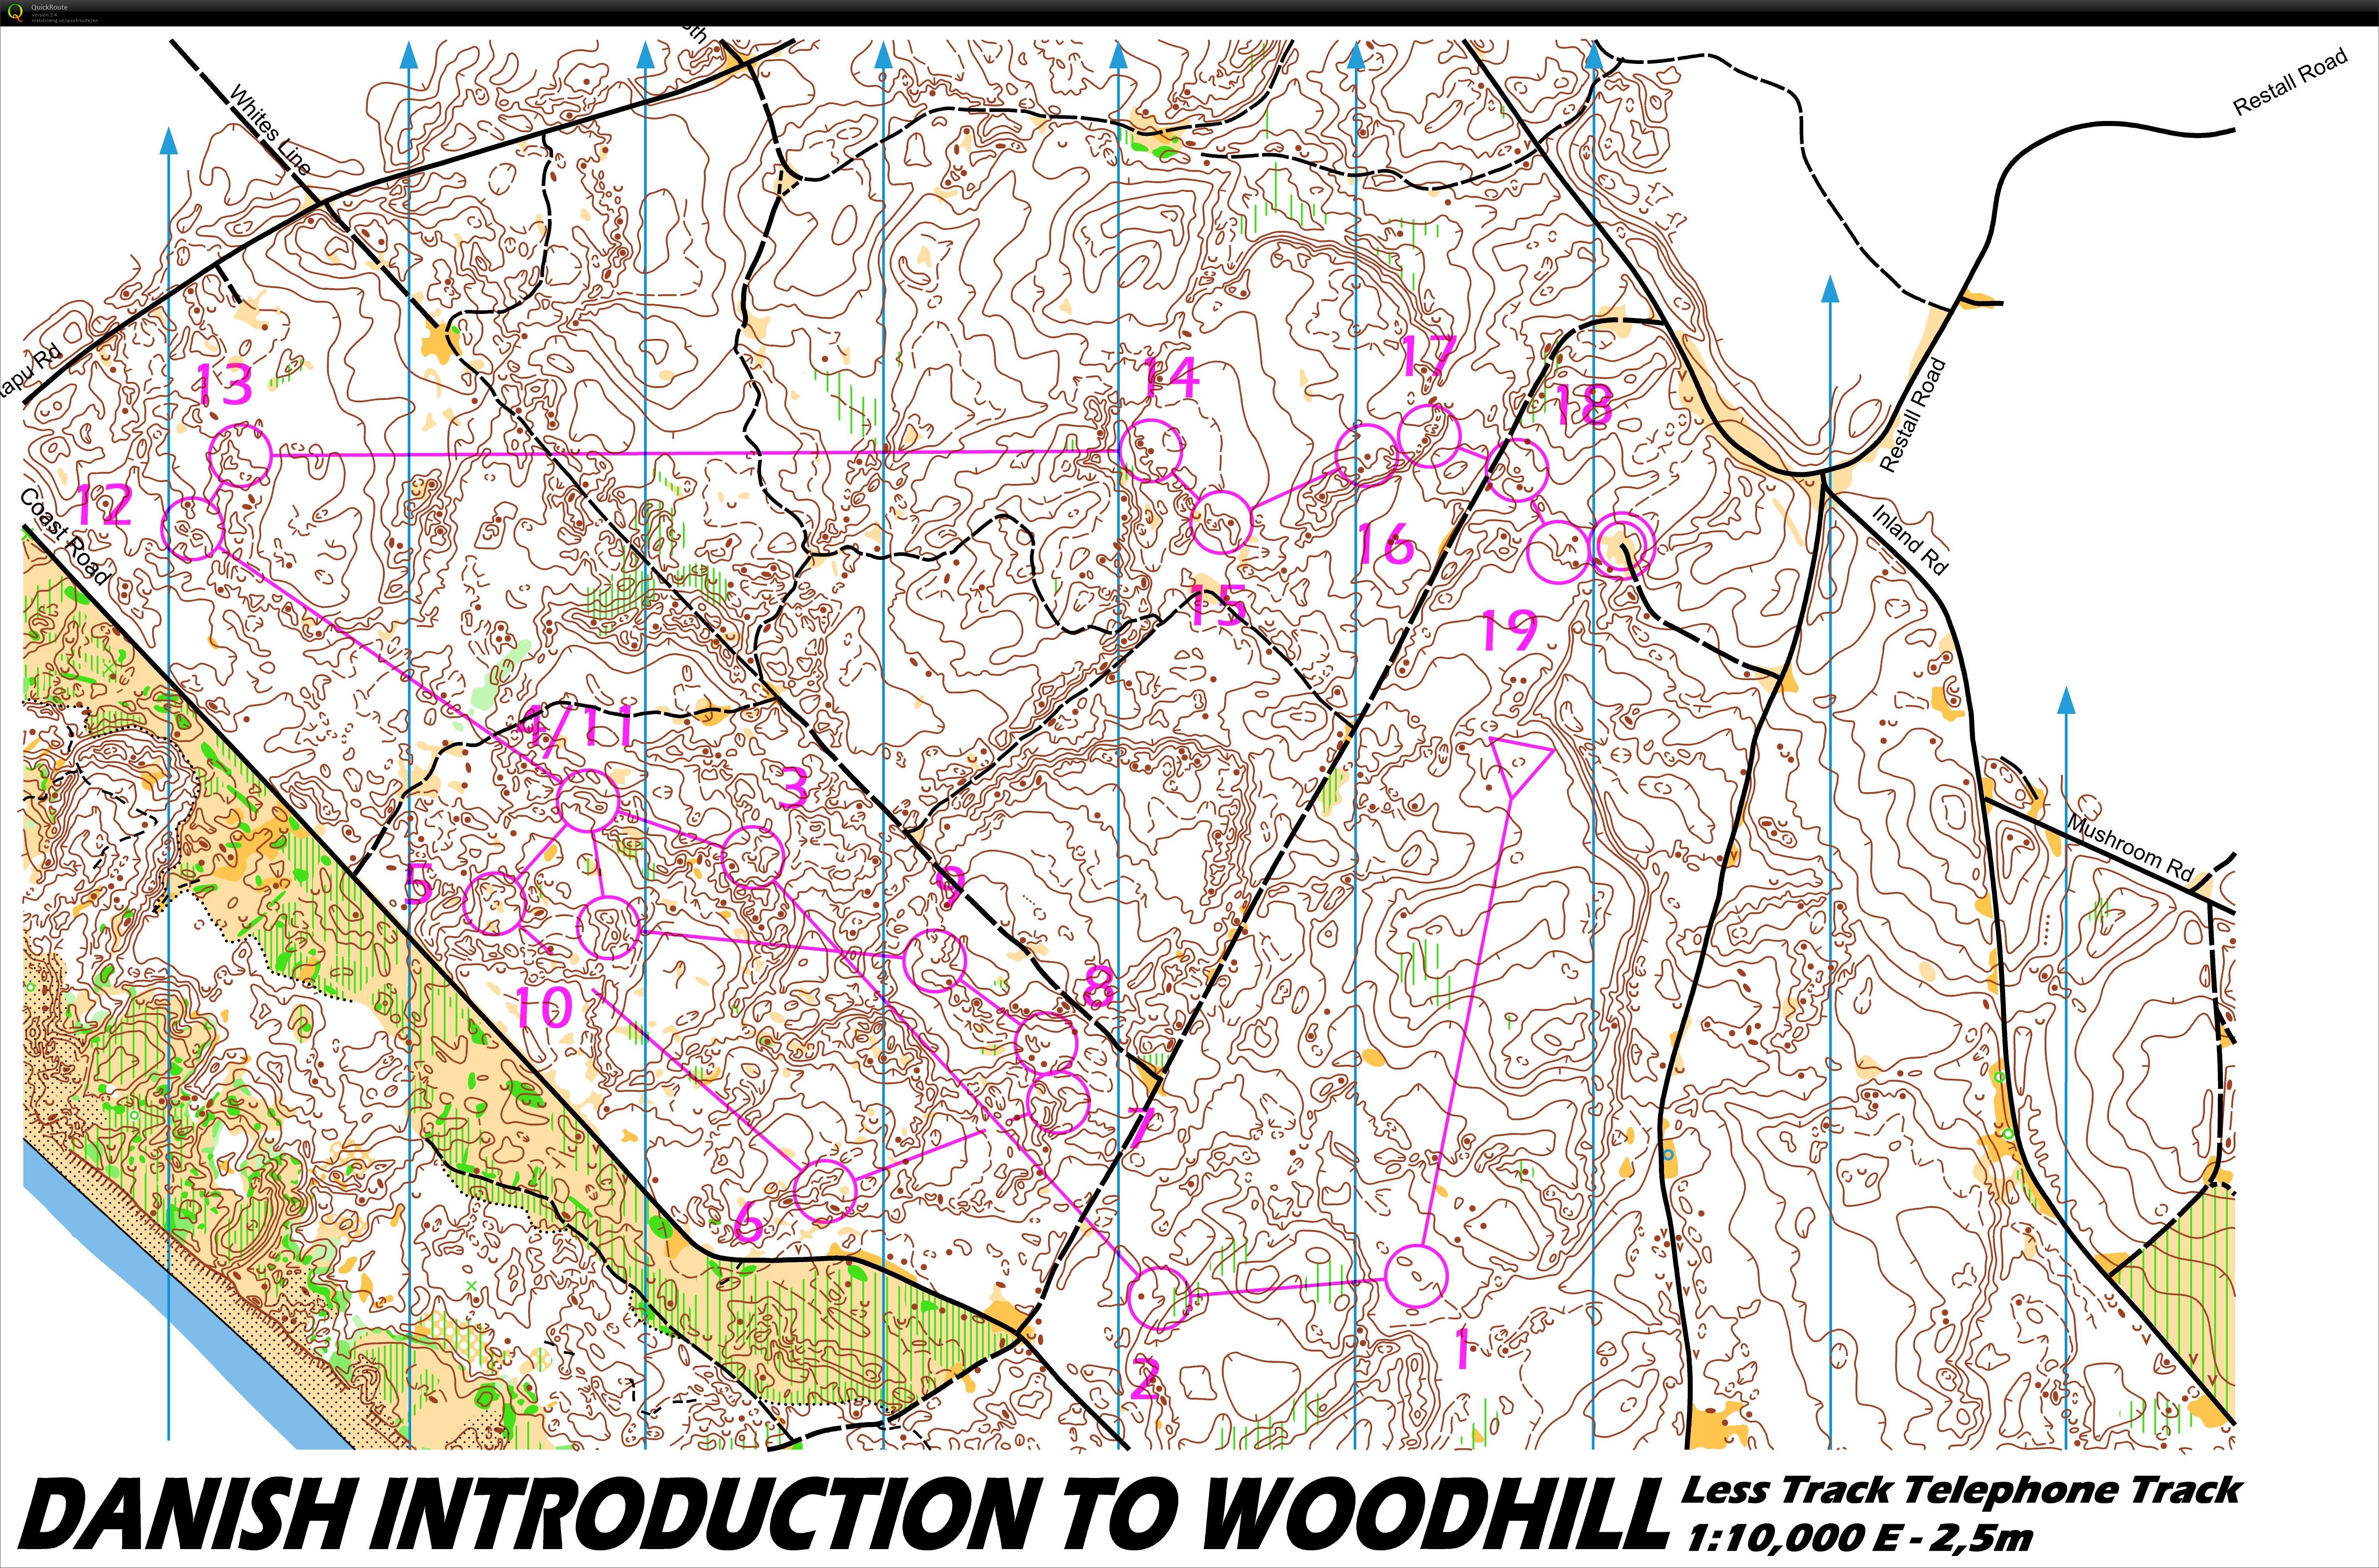 Danish Introduction to Woodhill (17-01-2015)